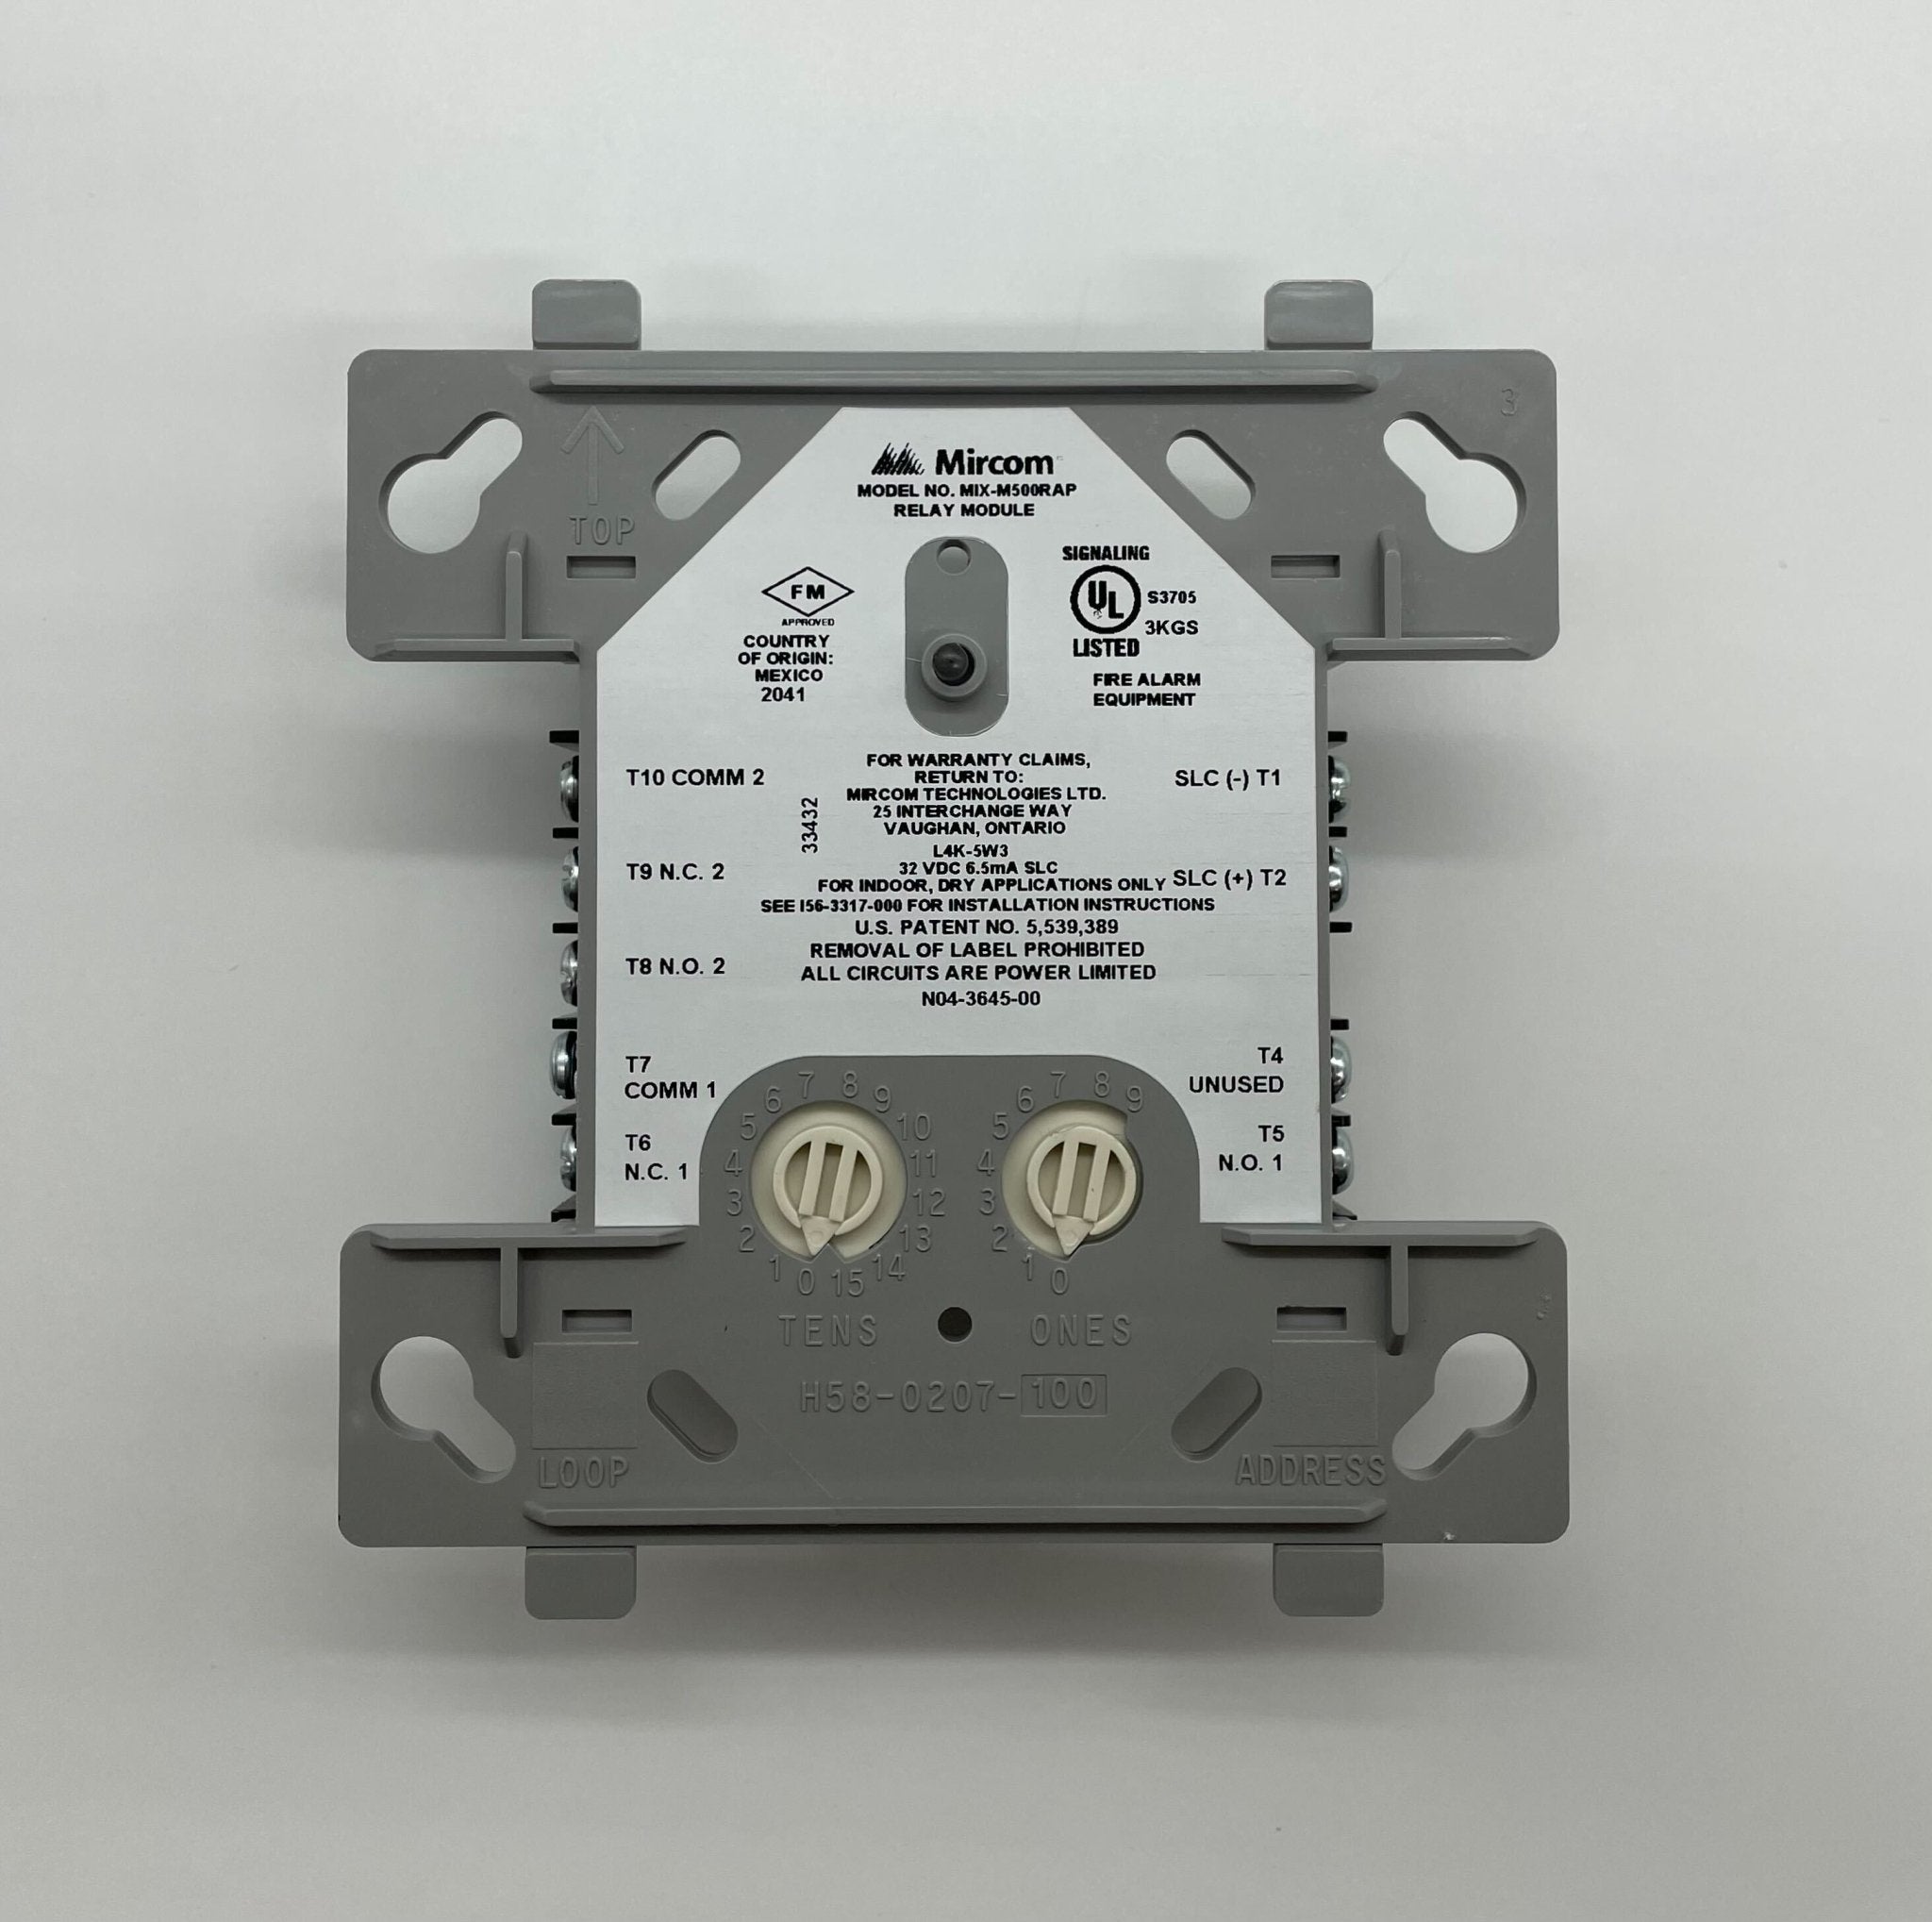 Mircom MIX-M500RAP Relay Control Module - The Fire Alarm Supplier